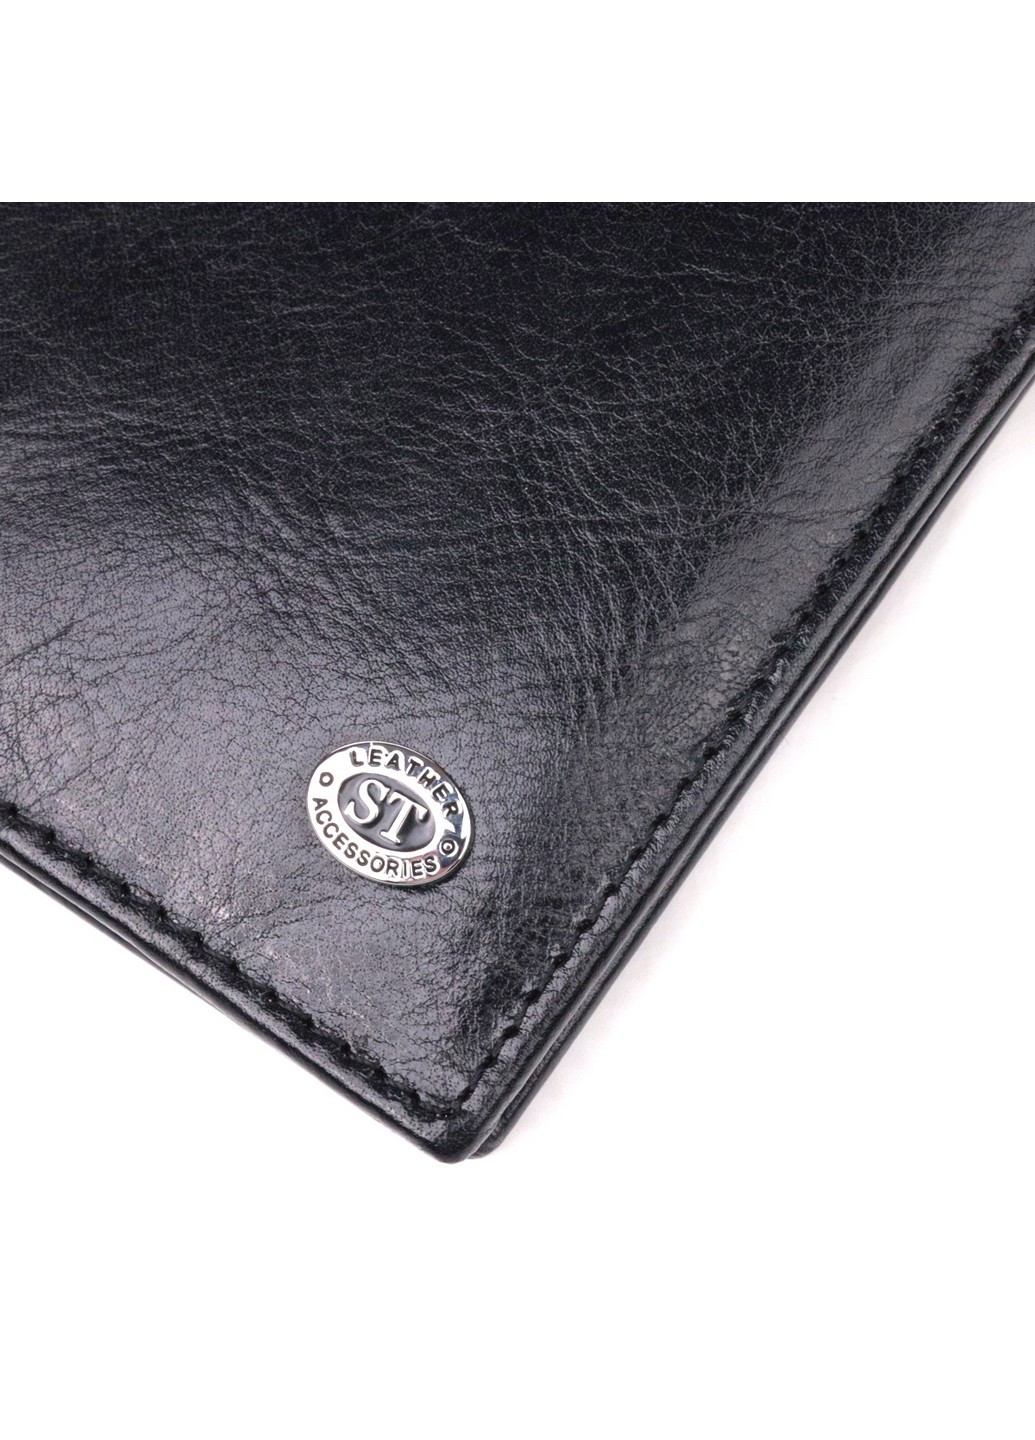 Бумажник кожаный мужской 9,5х17х2 см st leather (257255452)